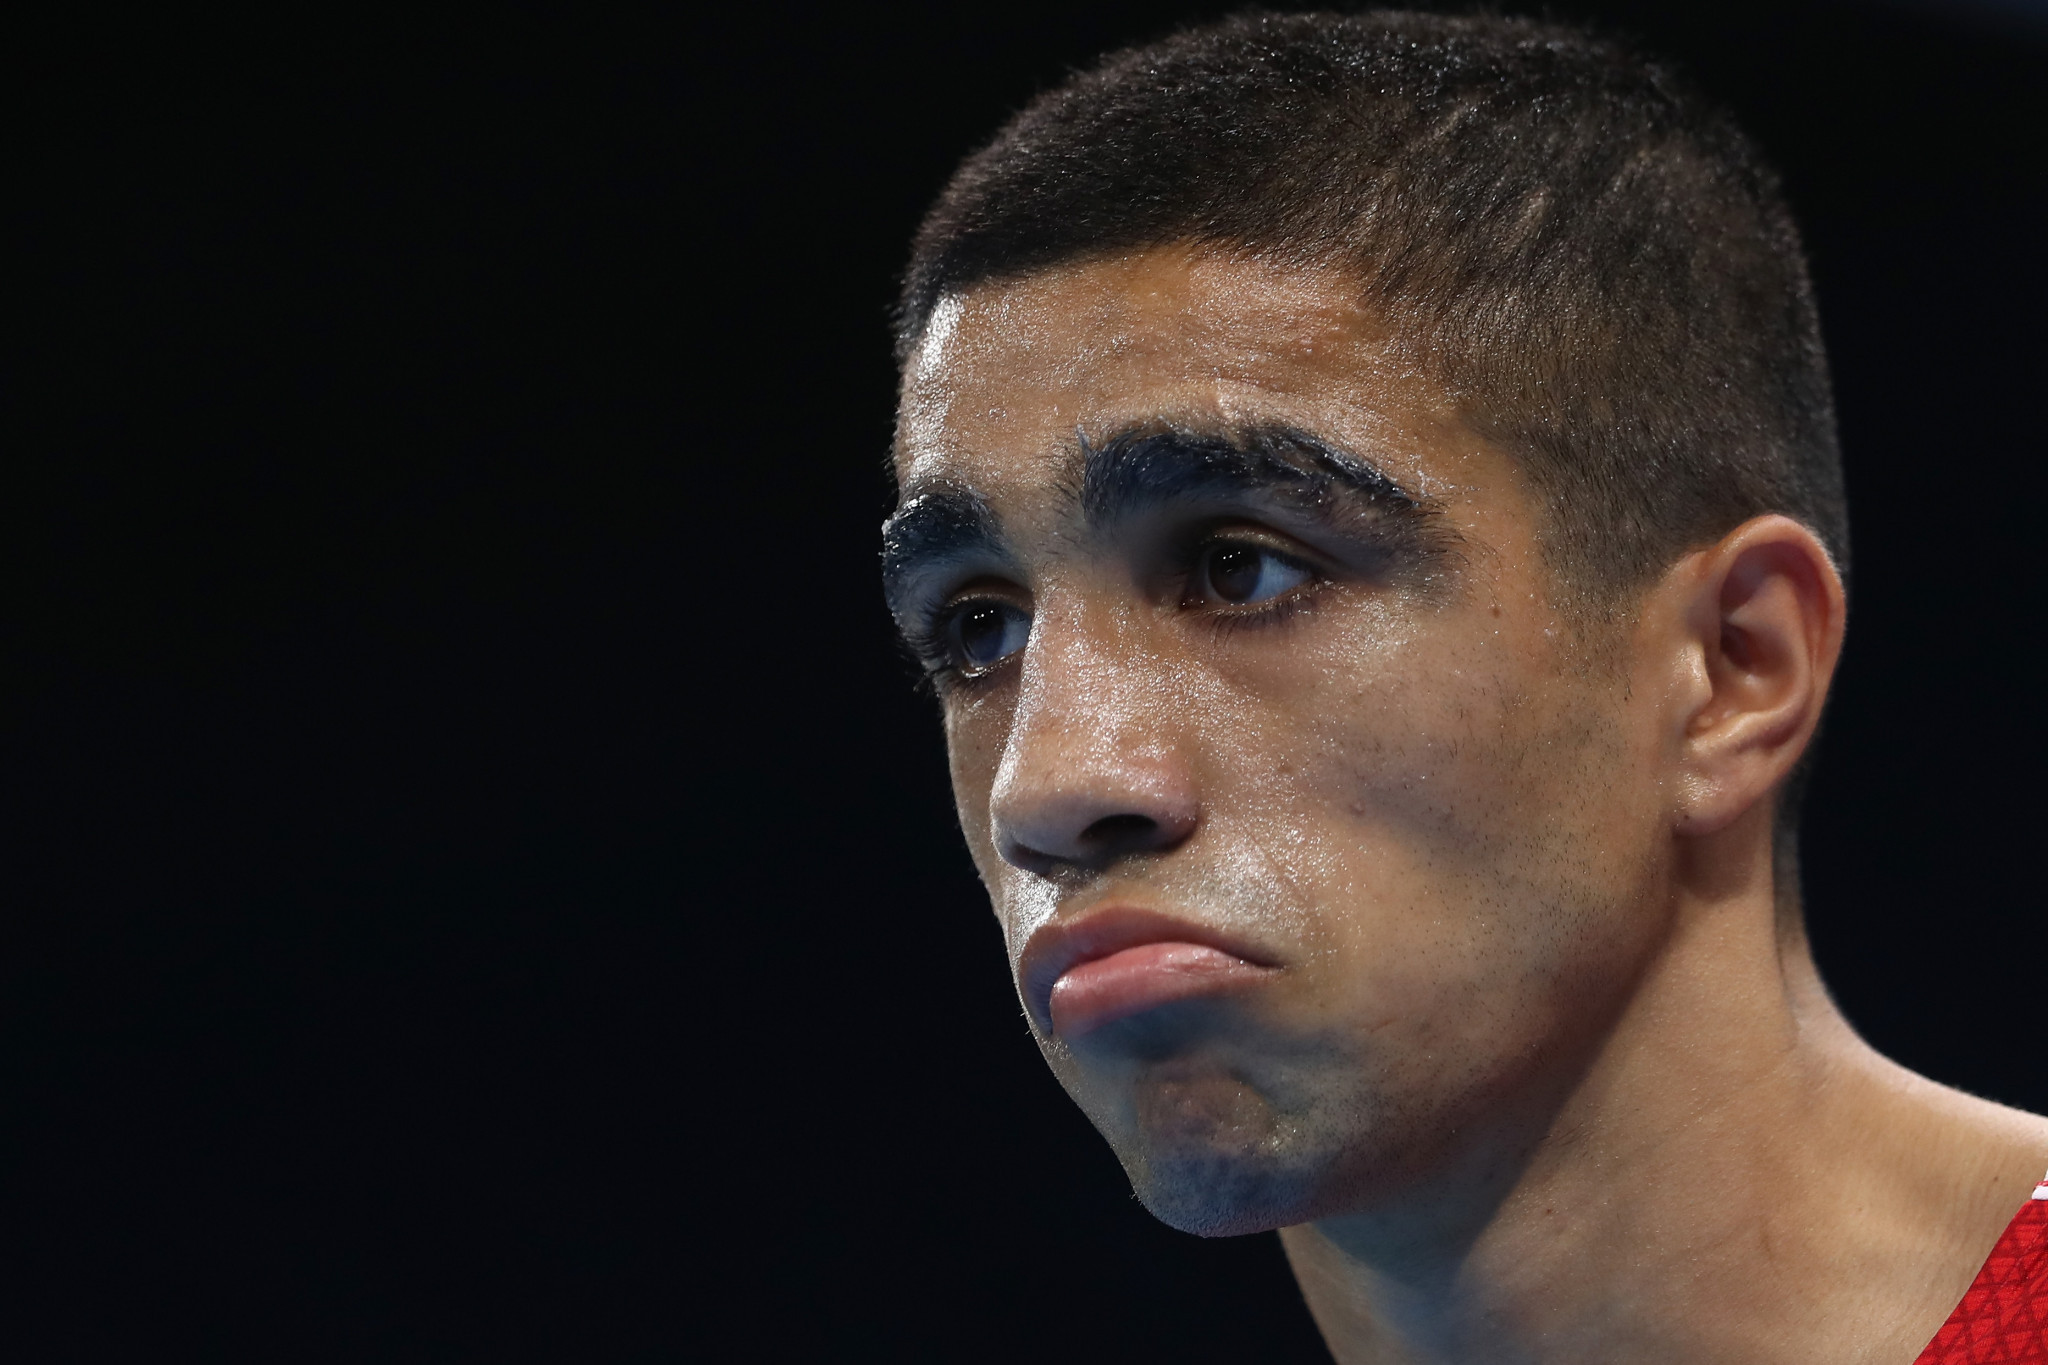 British boxer Ali to serve two year sanction after positive drug test